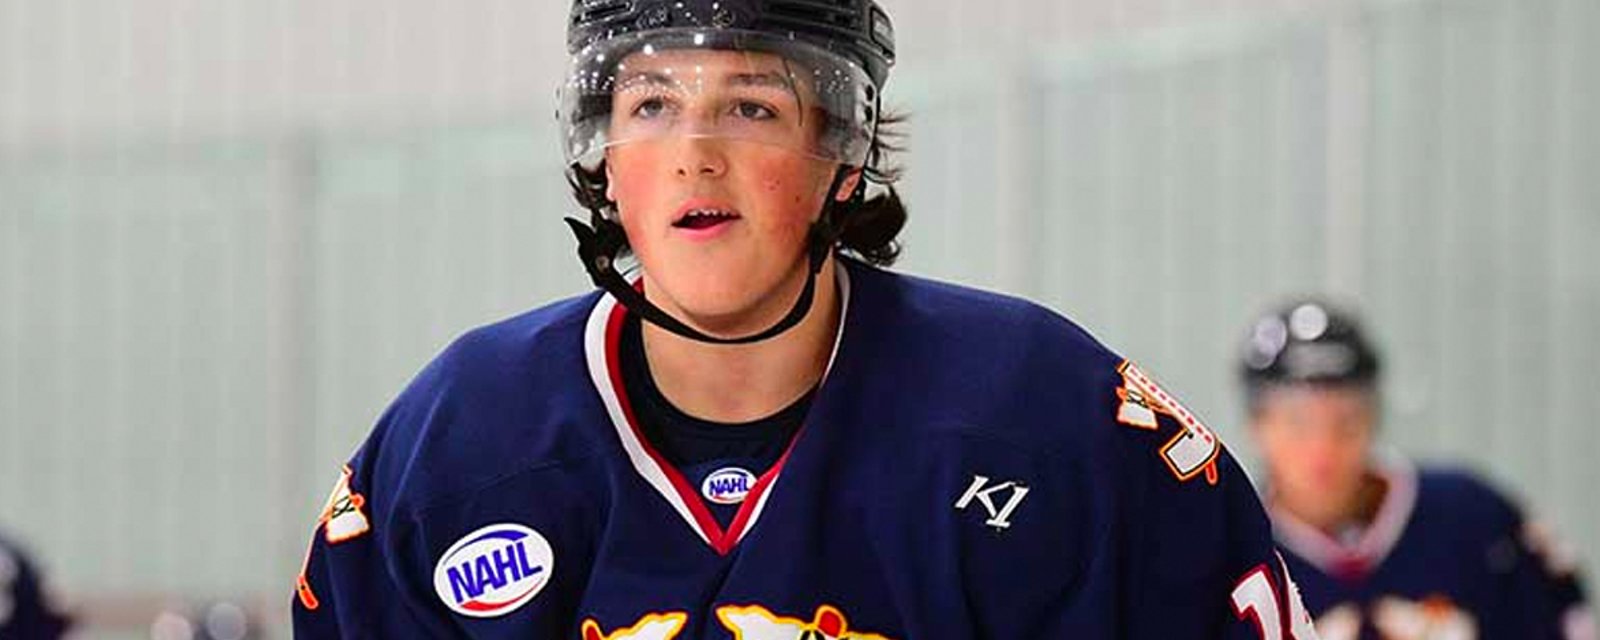 Daniel Briere's son gets invite to NHL training camp